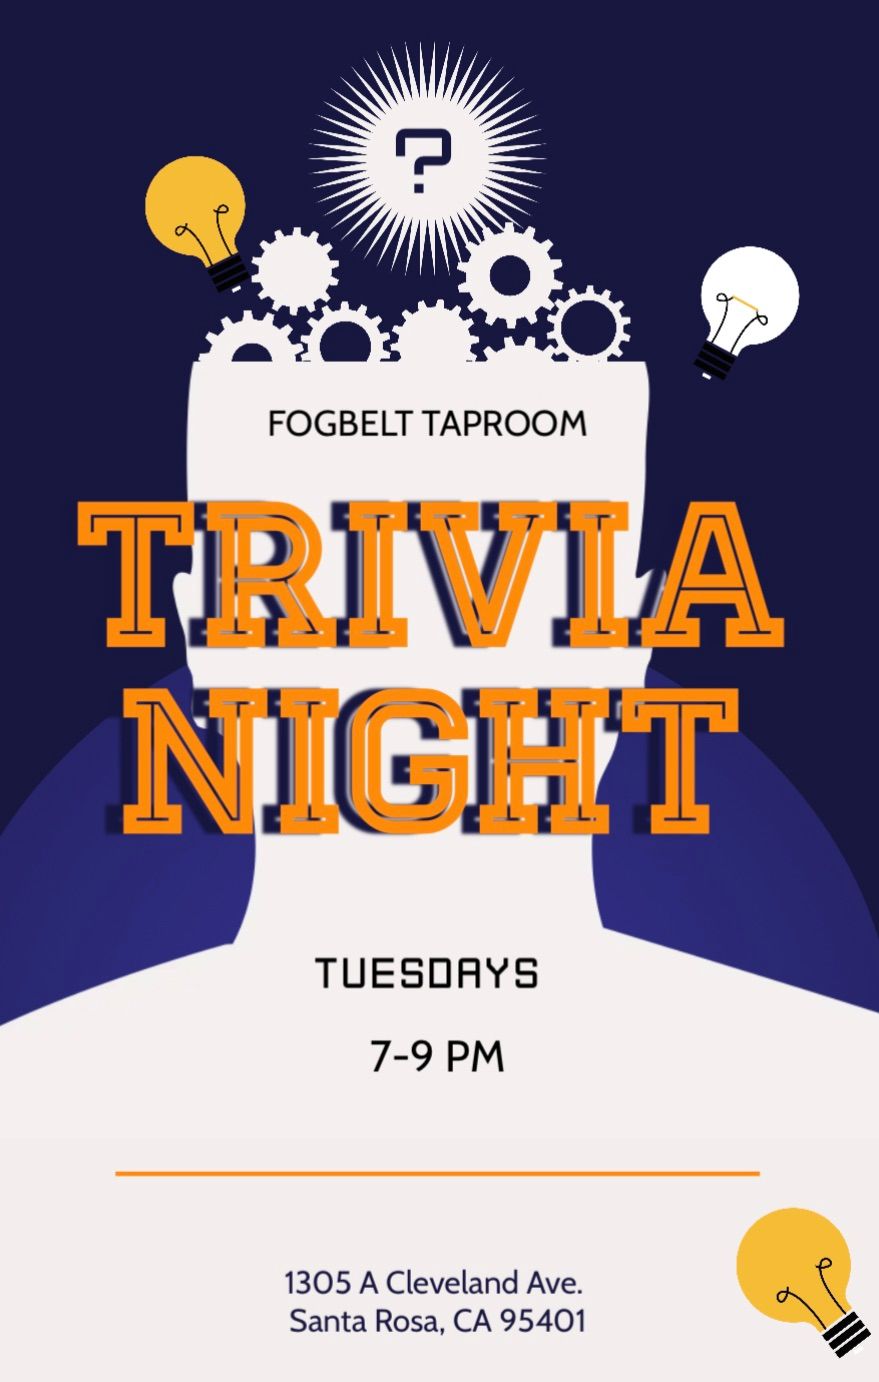 Fogbelt Tuesday Night Trivia 